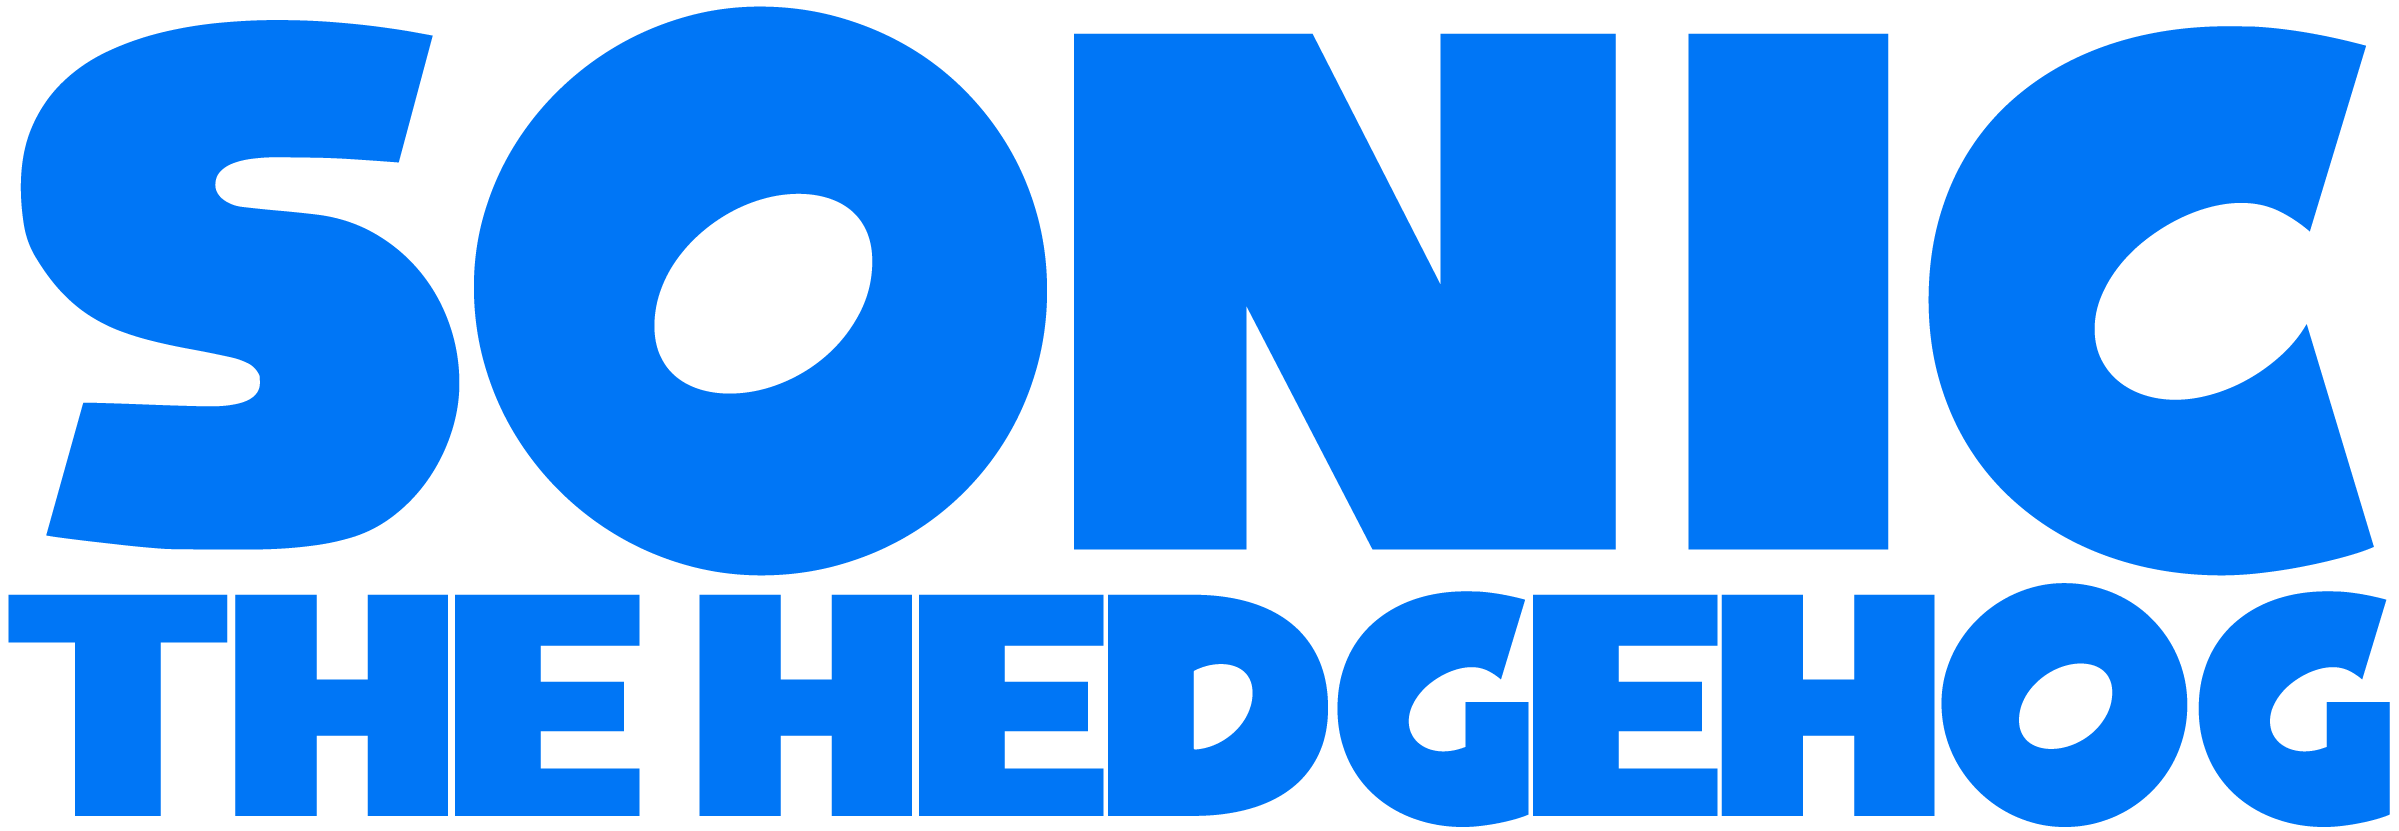 Sonic Logo - File:Sonic logo.png - Wikimedia Commons